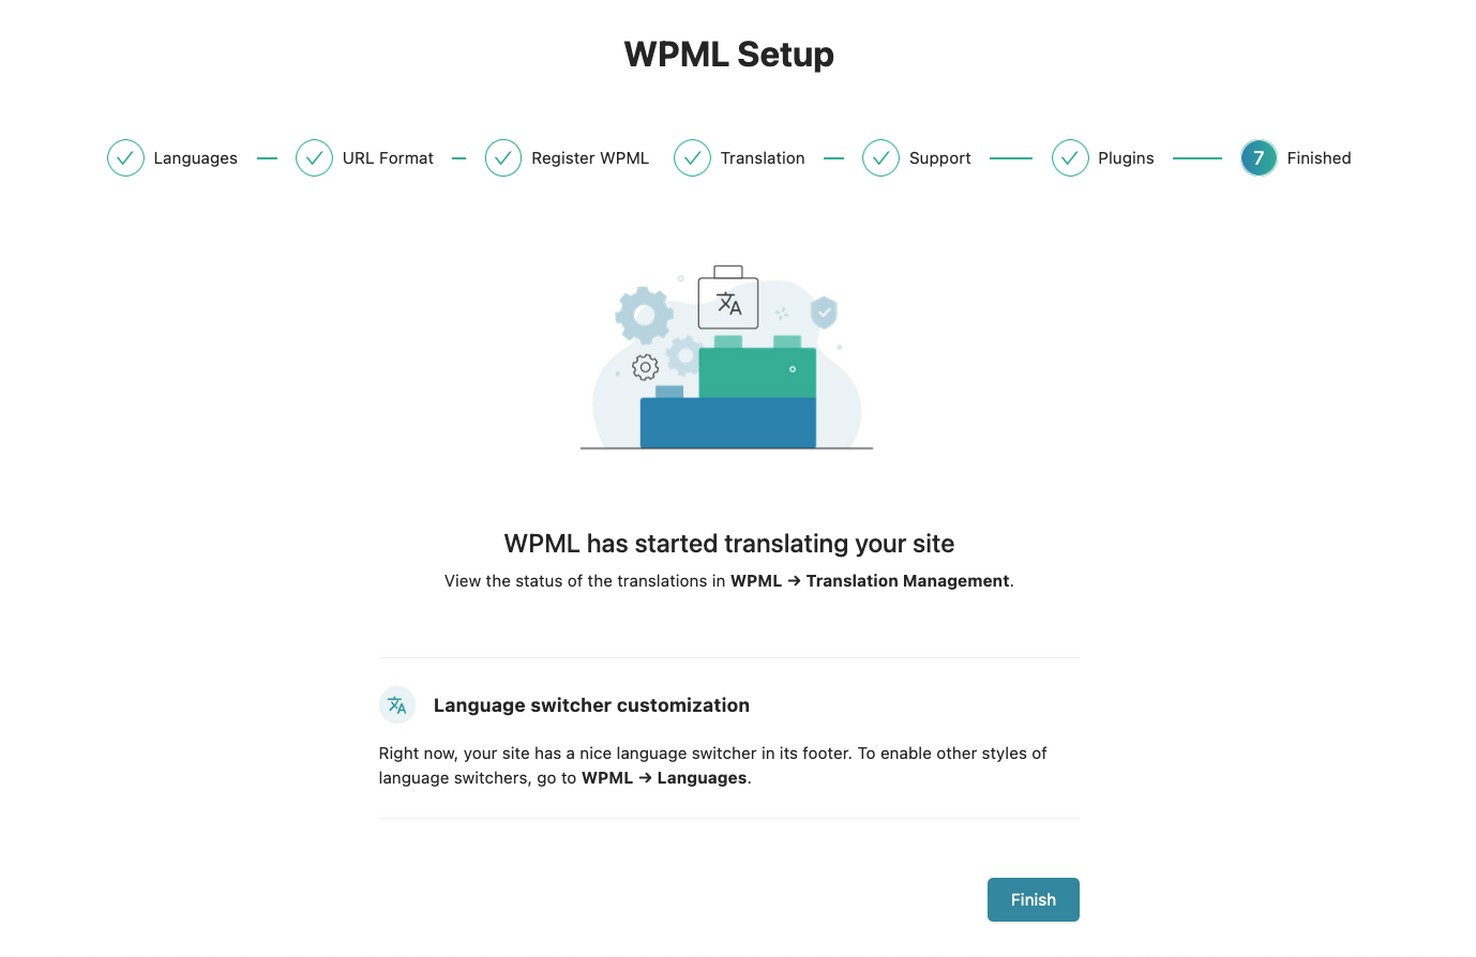 Finalizing WPML setup